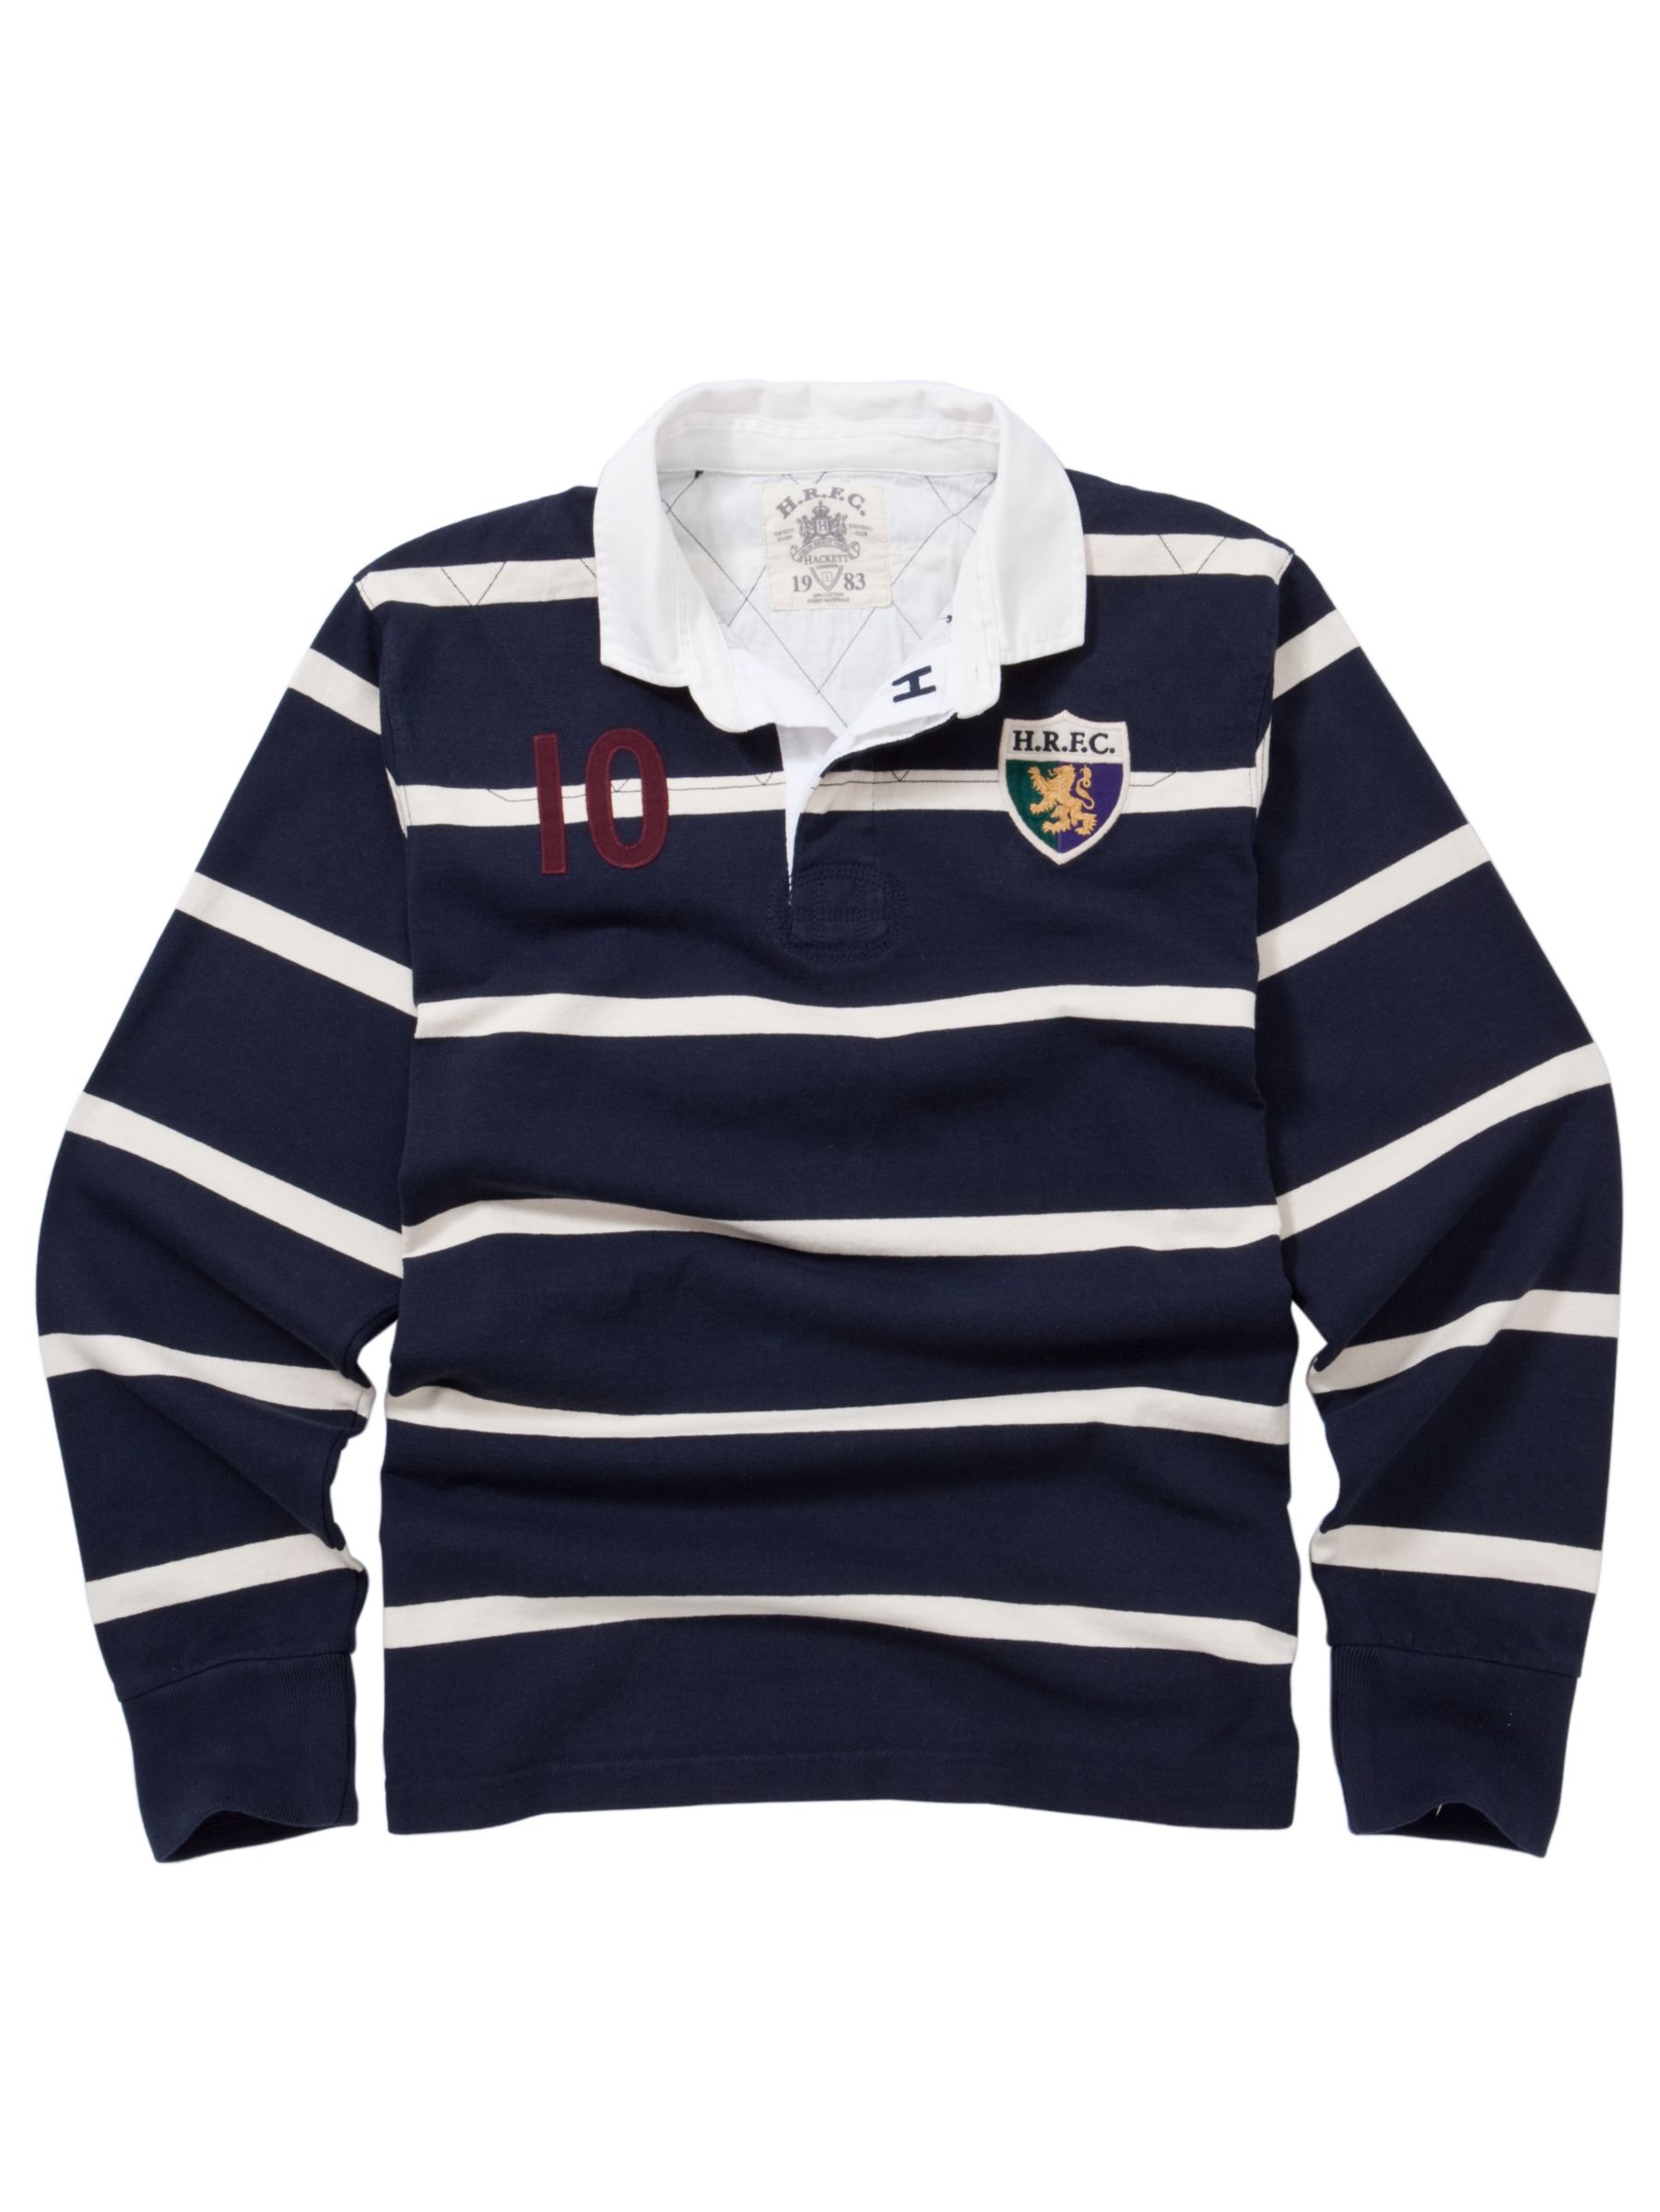 Hackett London Inch Stripe Rugby Shirt, Navy